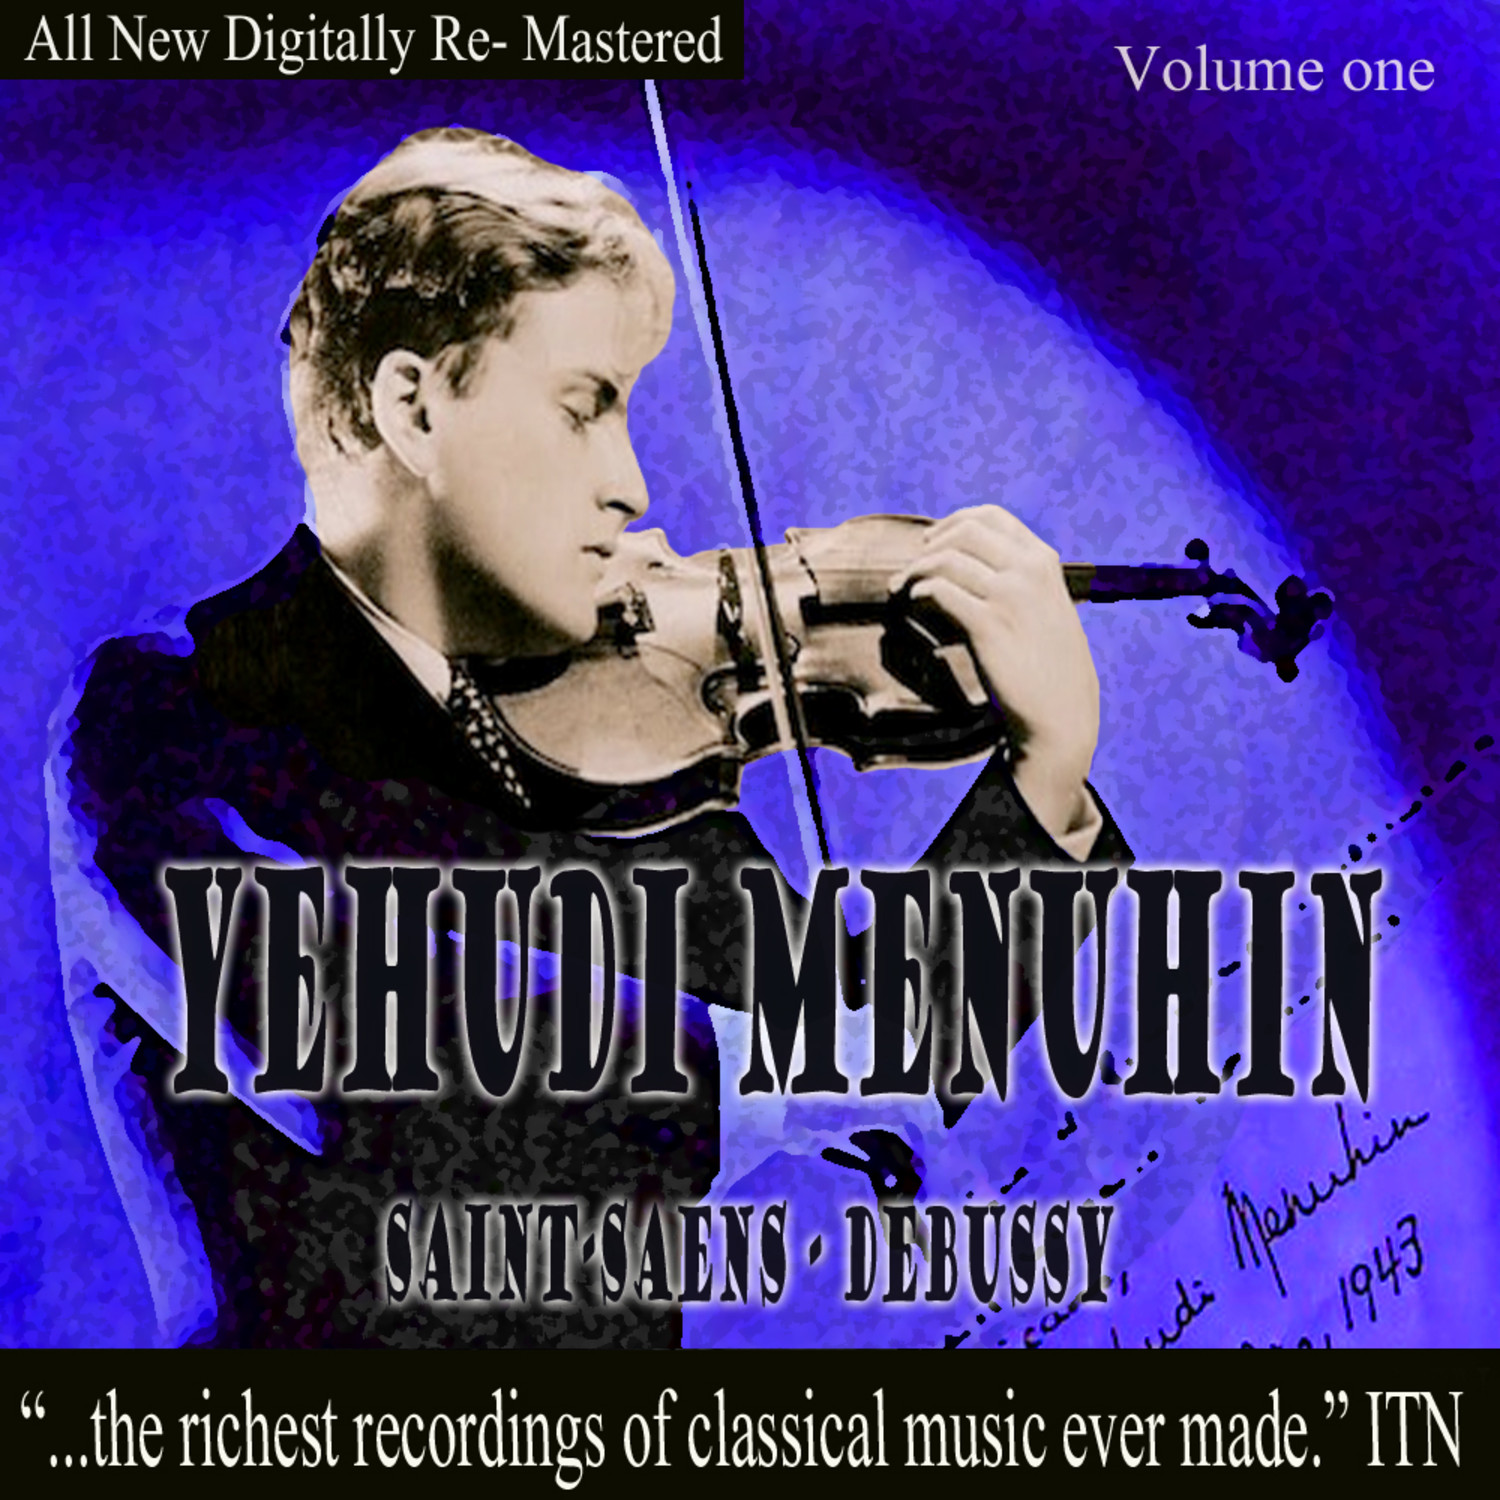 Yehundi Menuhin - Saint-Saens, Debussy Volume One